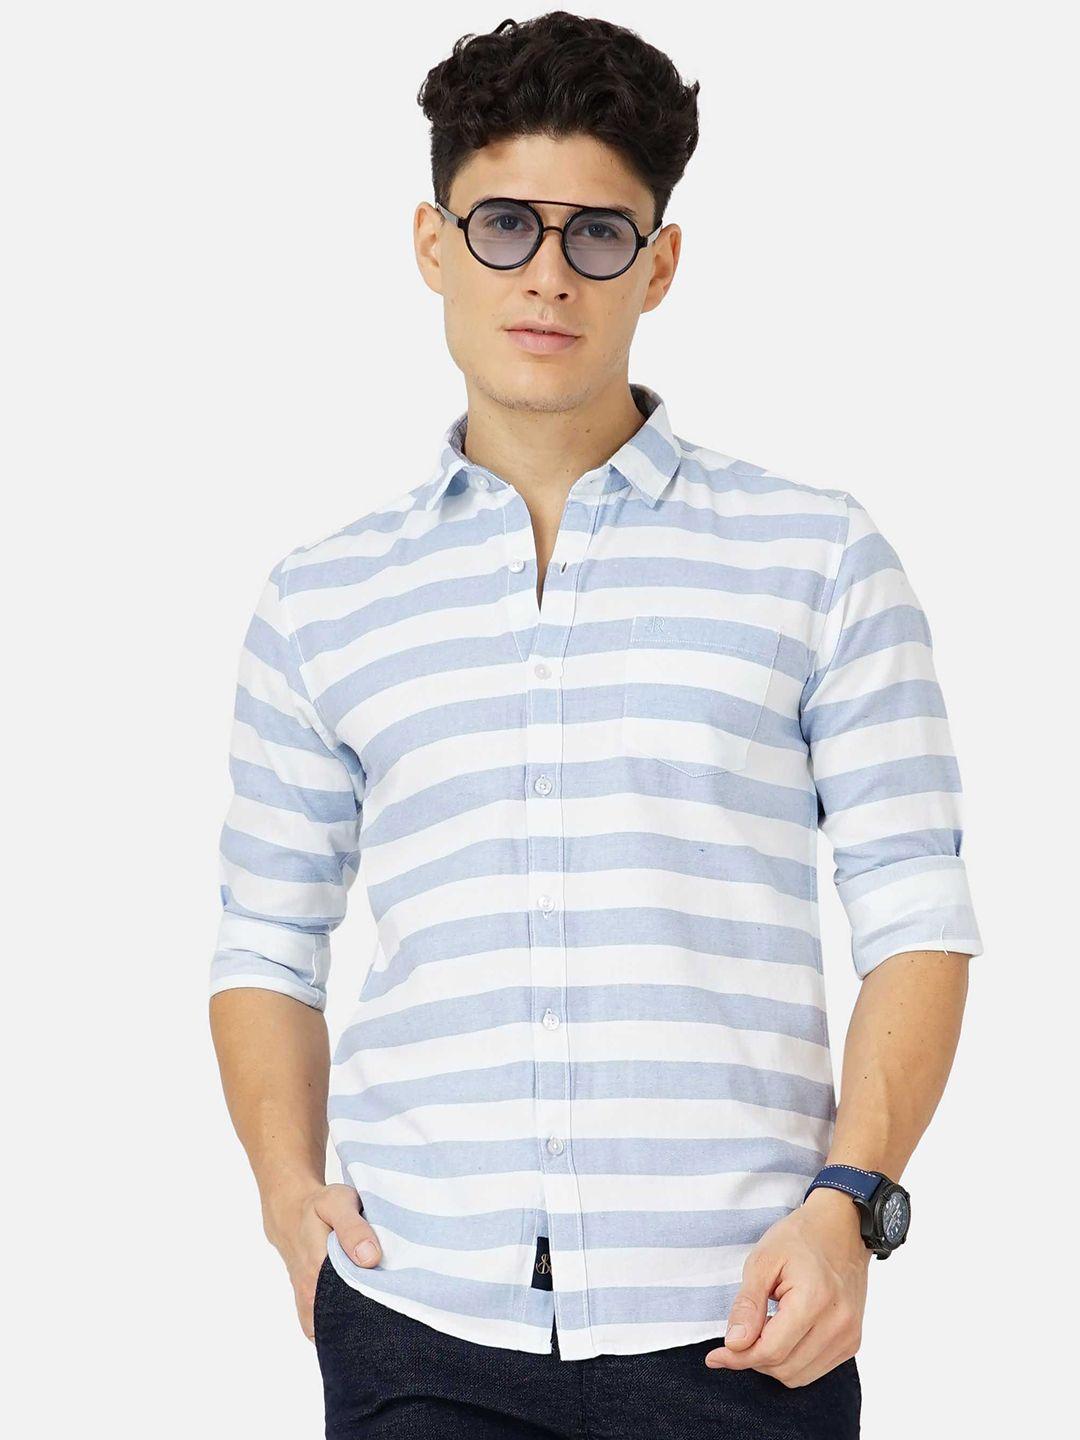 soratia men cotton horizontal stripes striped casual shirt